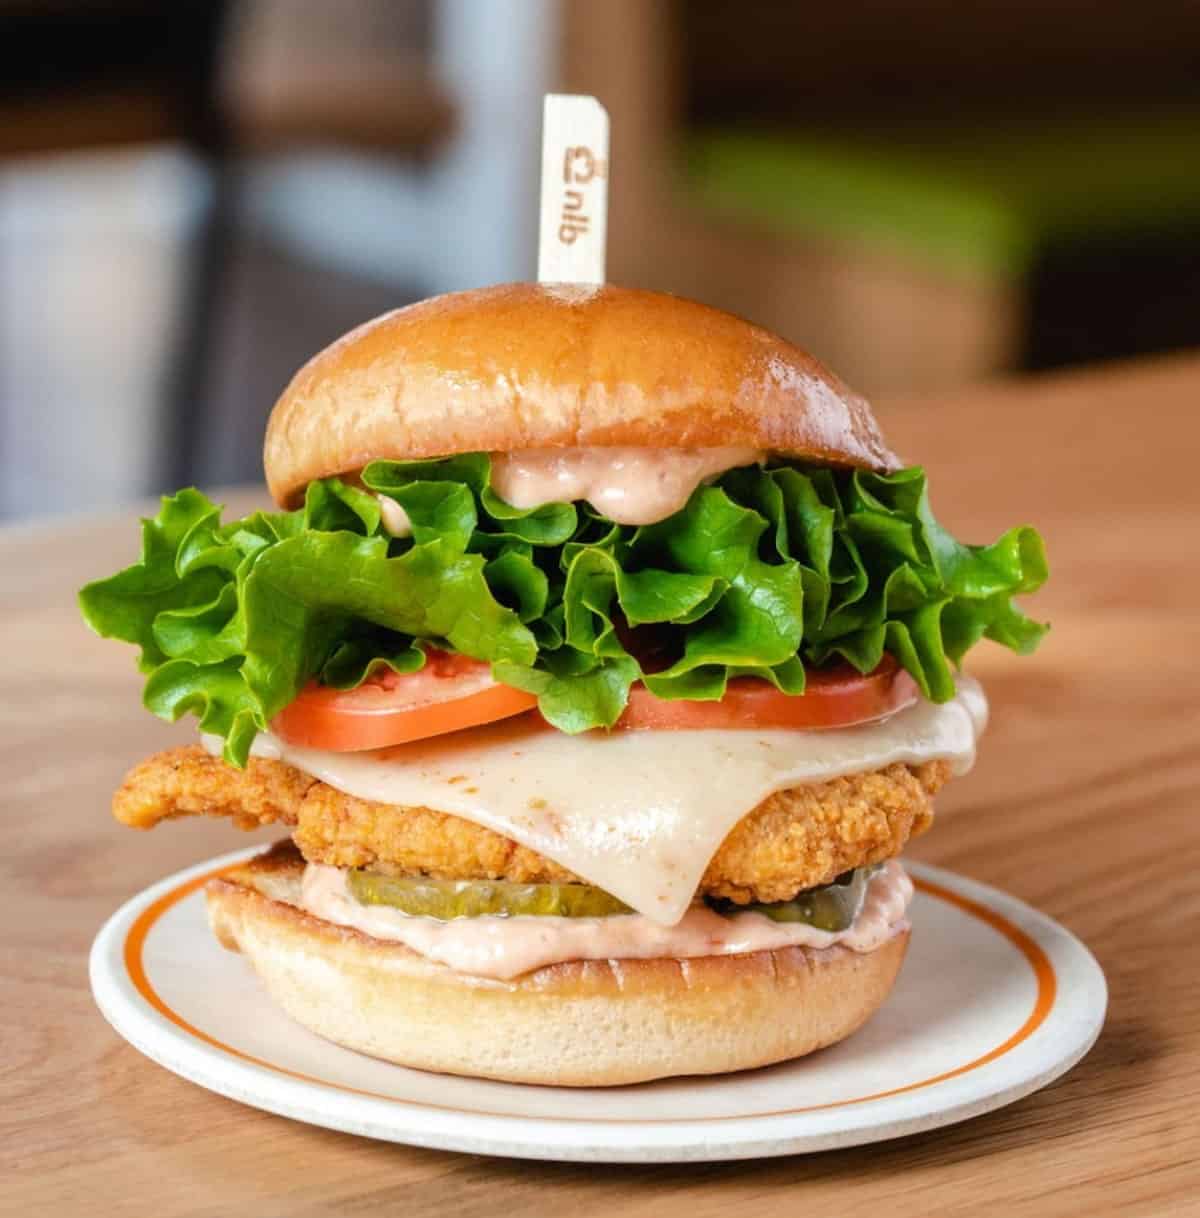 A vegan fire chick'n burger from Next Level Burger.